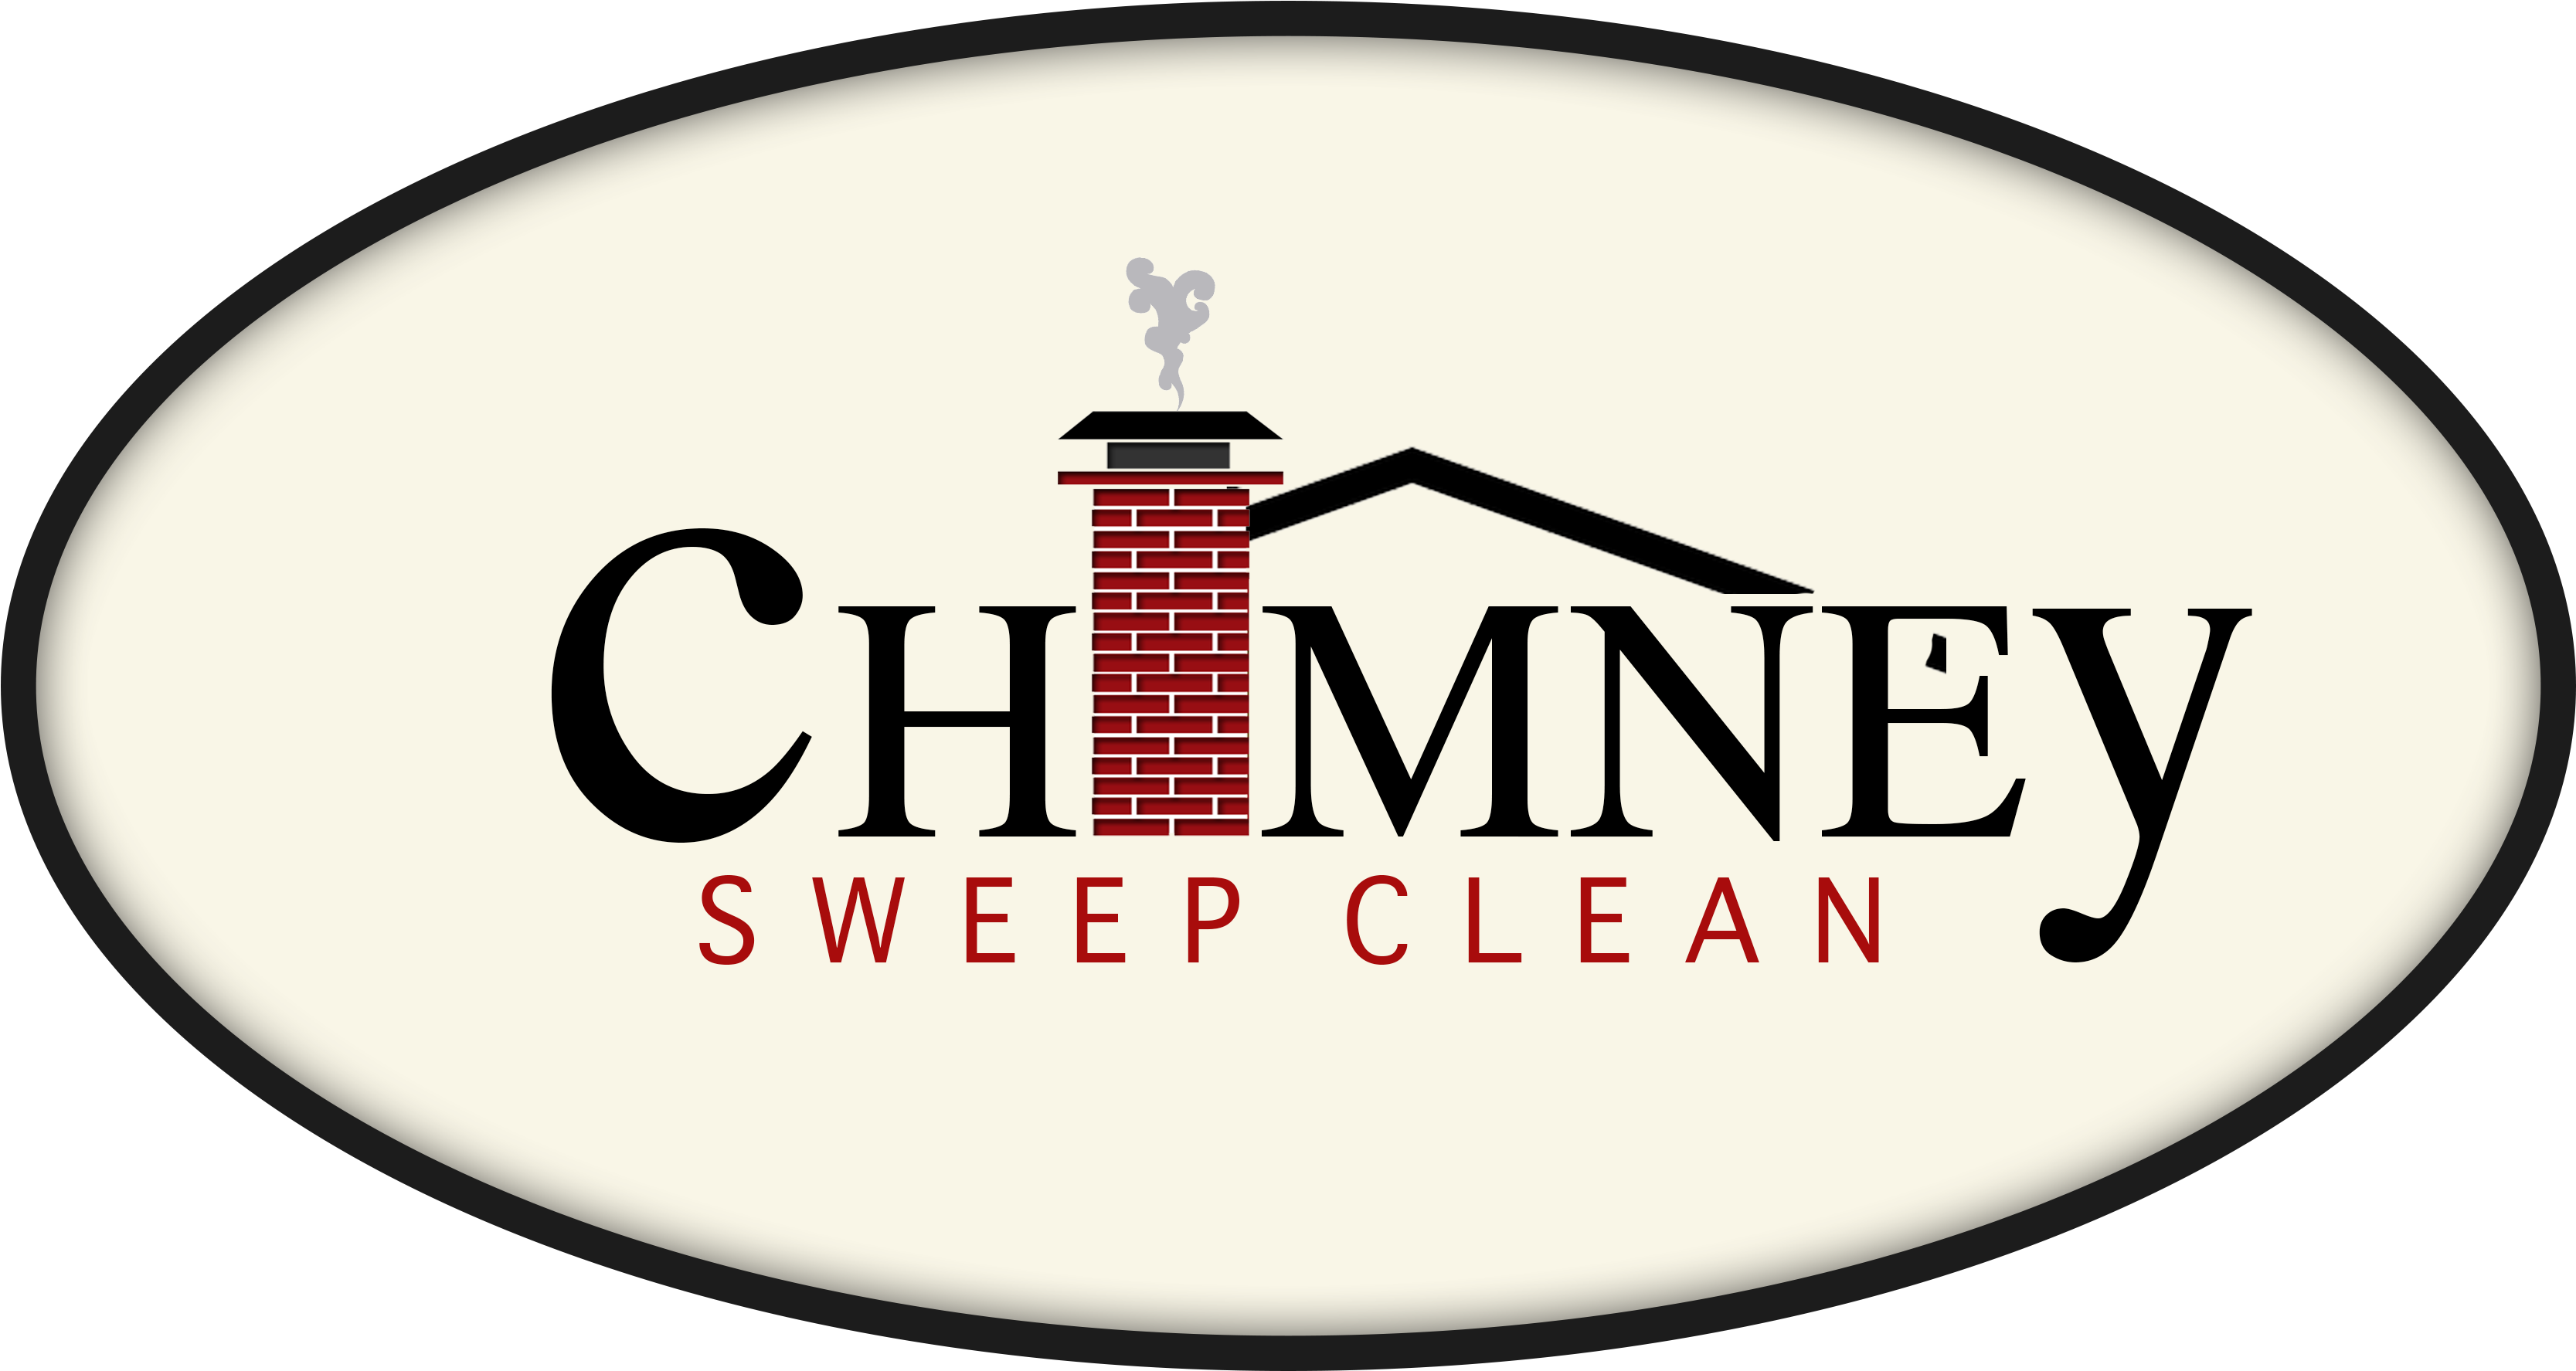 Chimney Sweep Clean - Chimney (3495x1890)